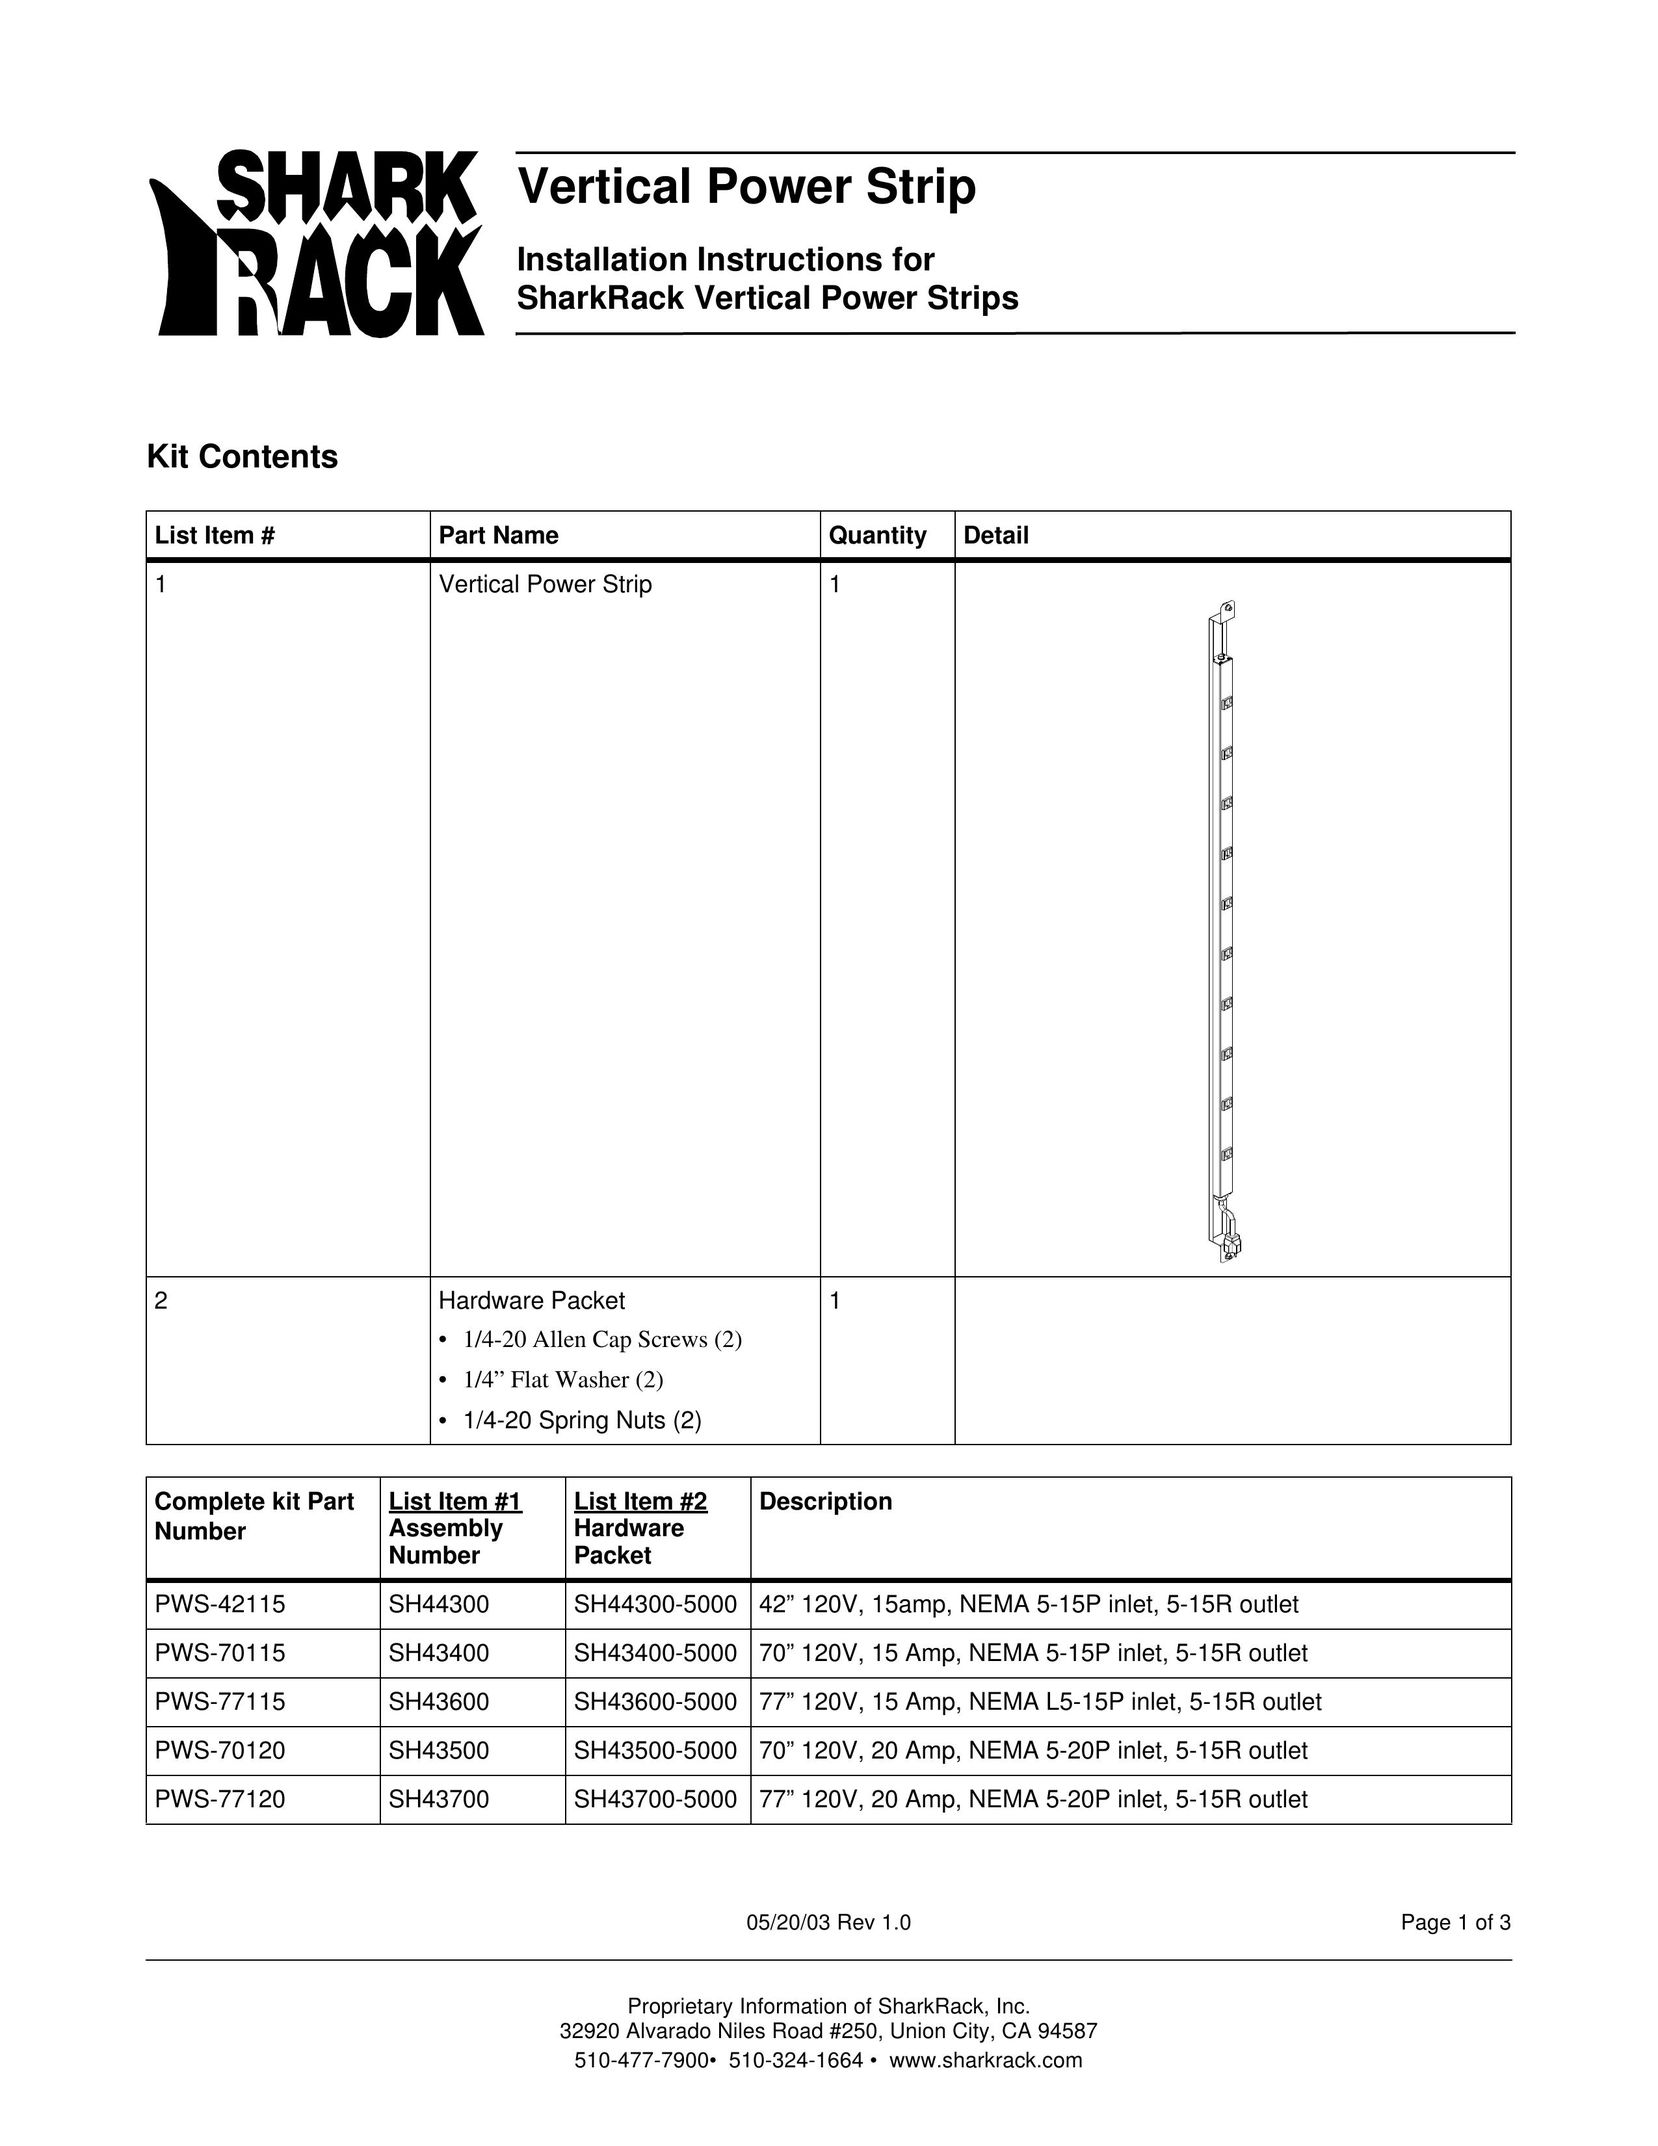 SharkRack PWS-70115 Surge Protector User Manual